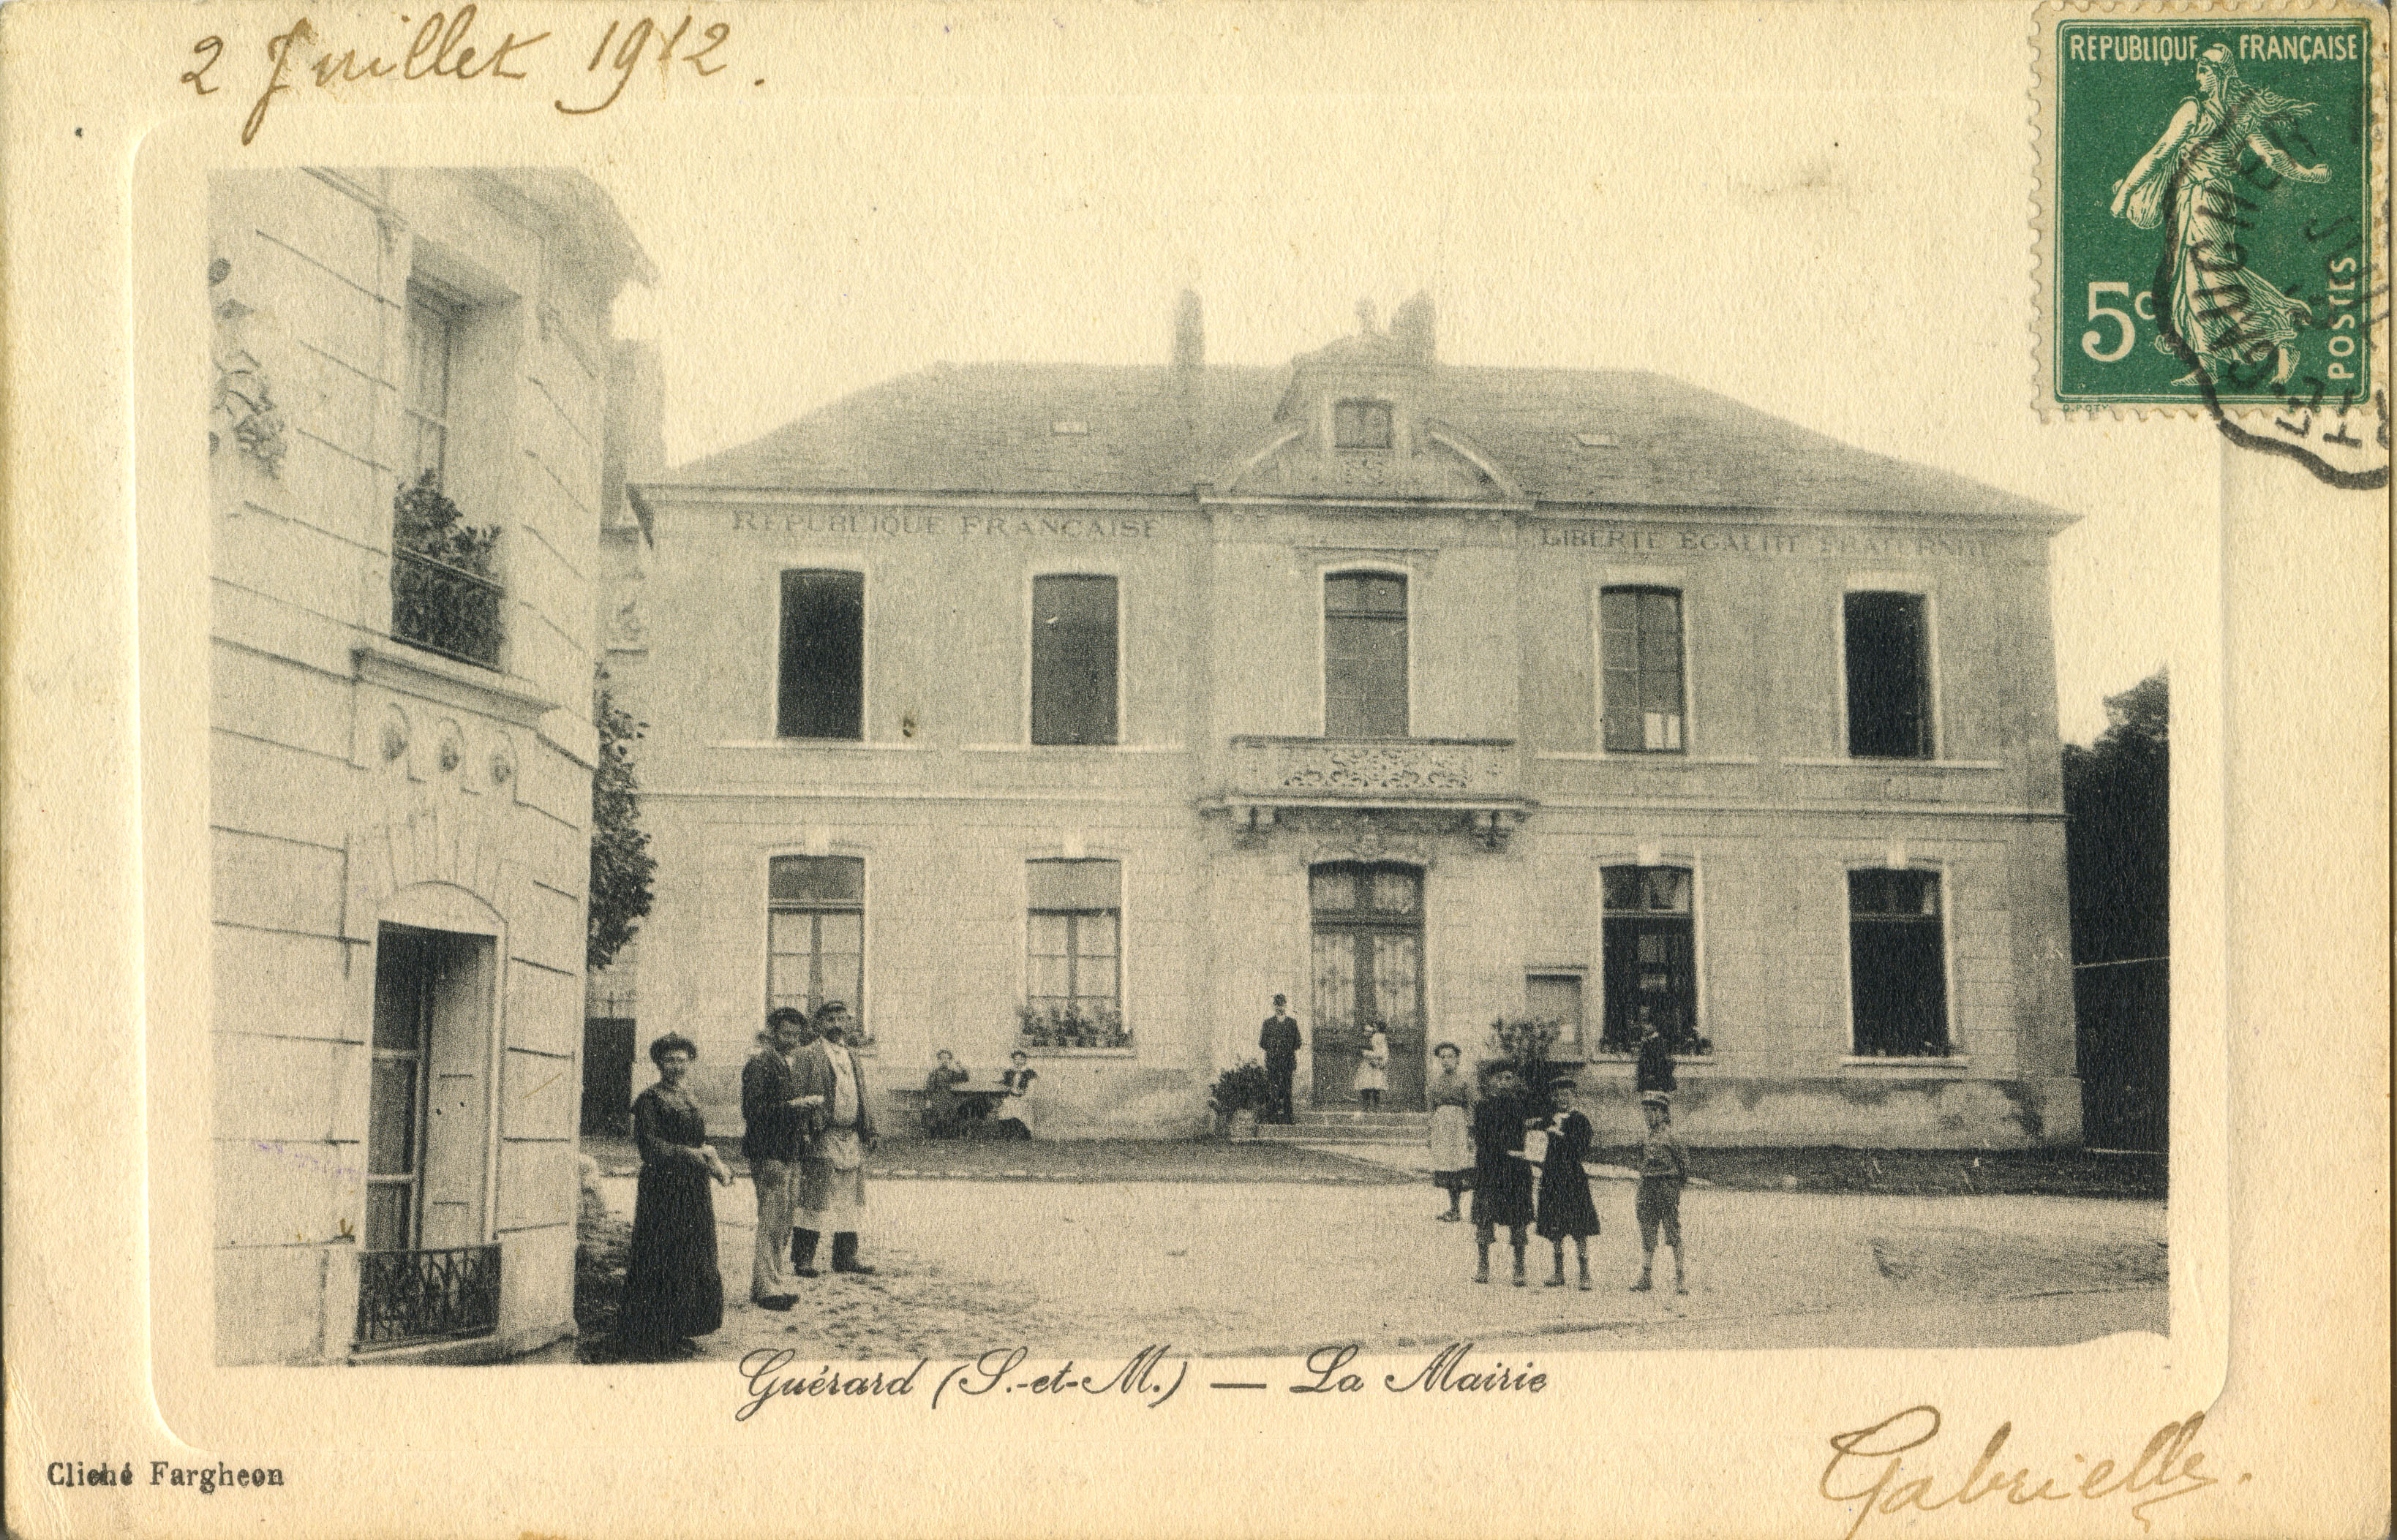 191 Guérard - Rue 19 la mairie 1912.jpg